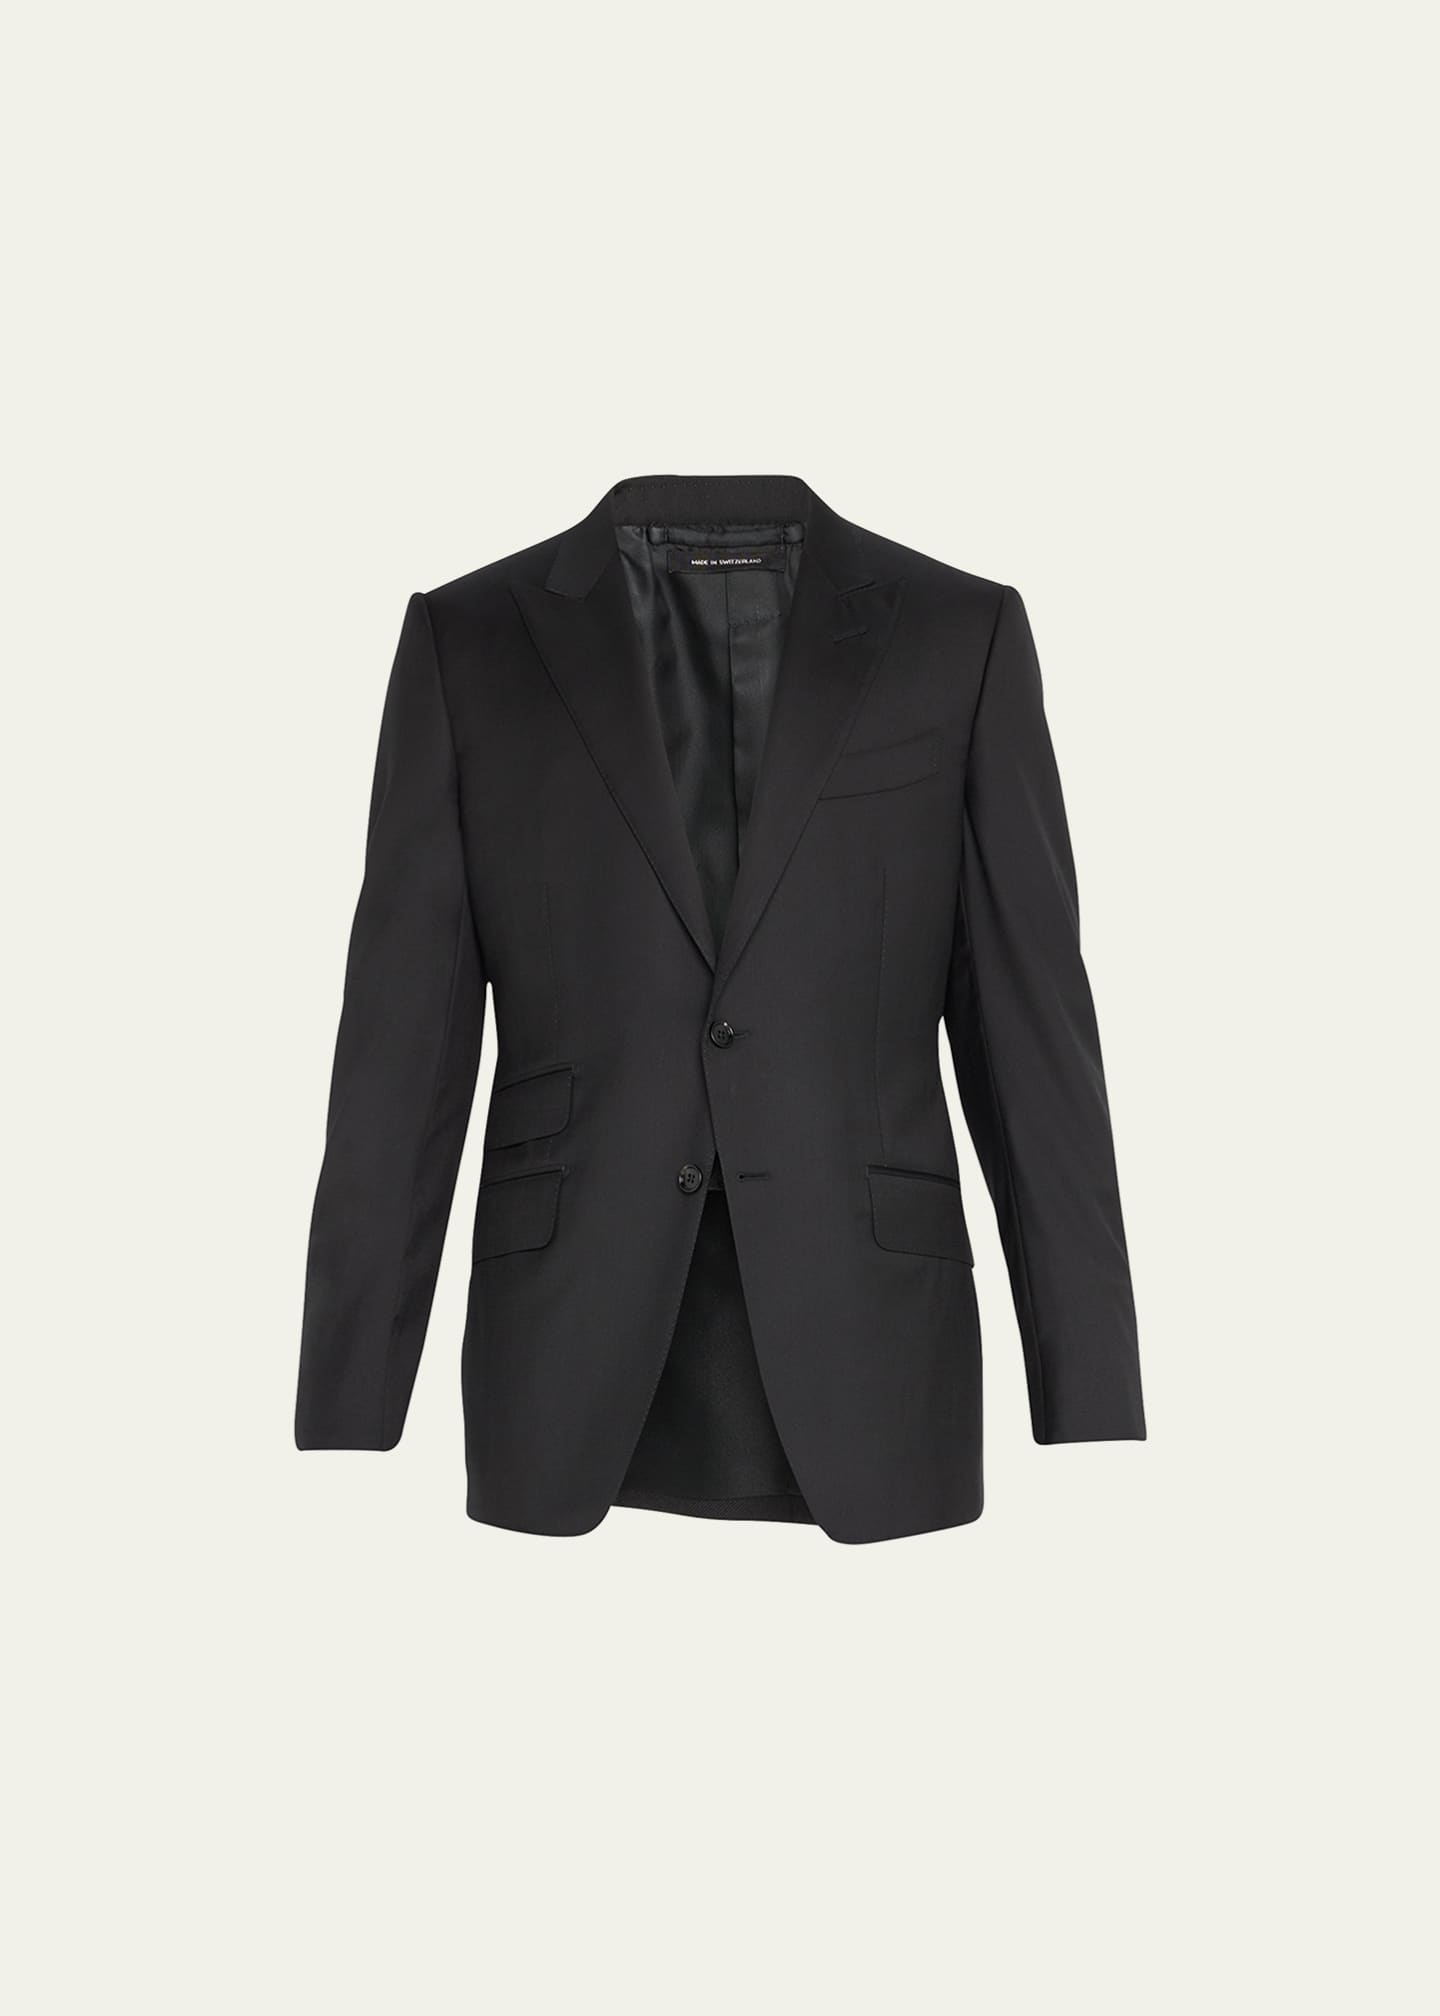 TOM FORD Men's Master Twill Suit - Bergdorf Goodman